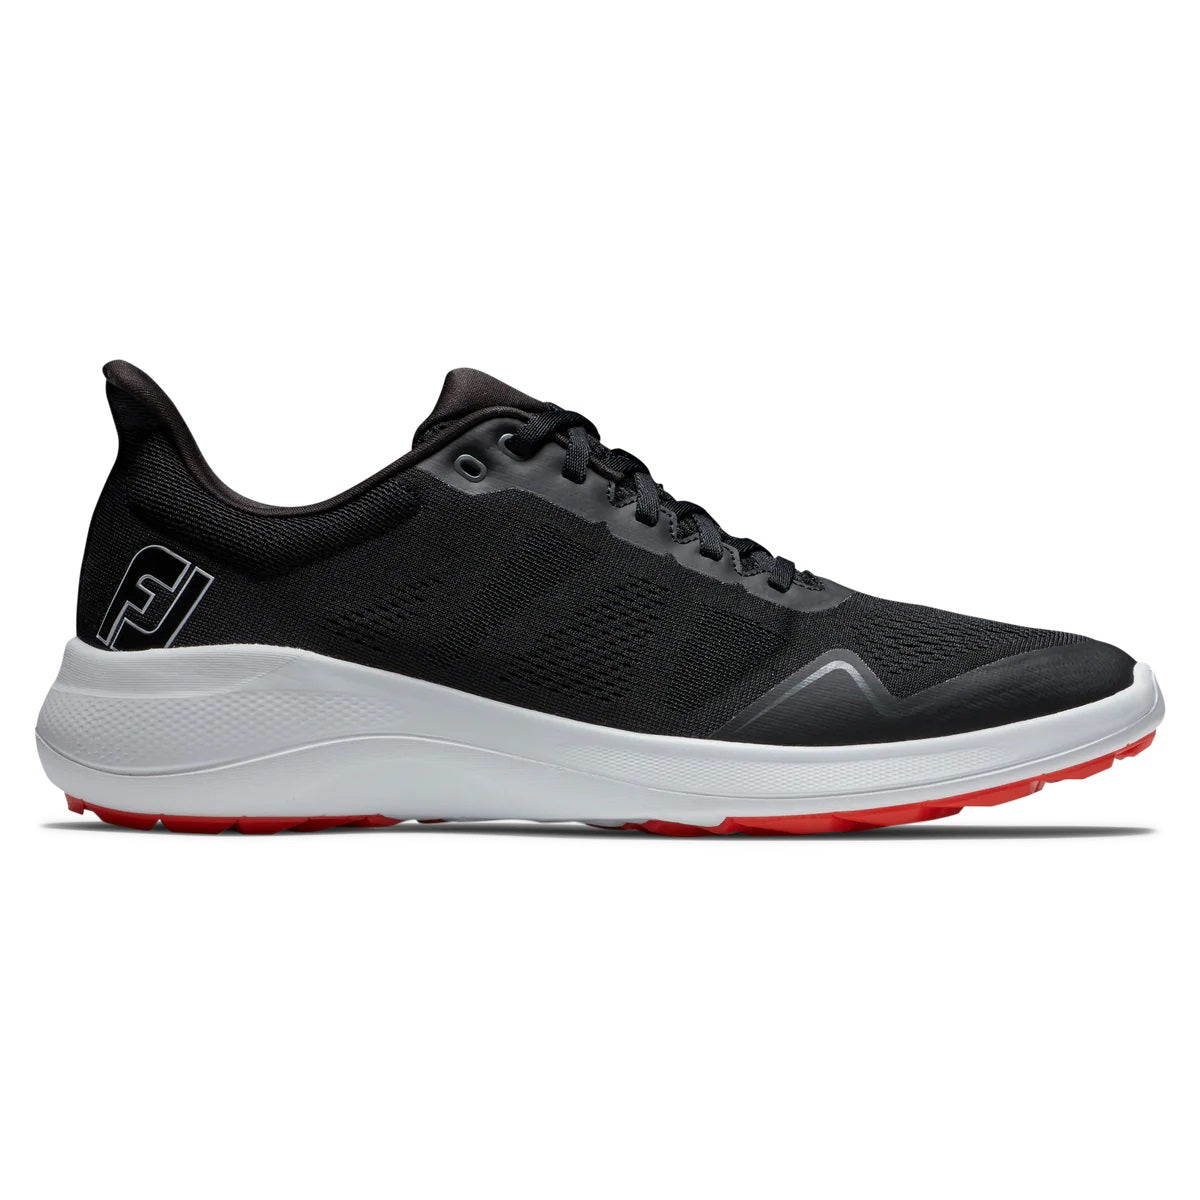 FootJoy Flex Golf Shoes Black/White/Red 56141 (Previous Season Style)